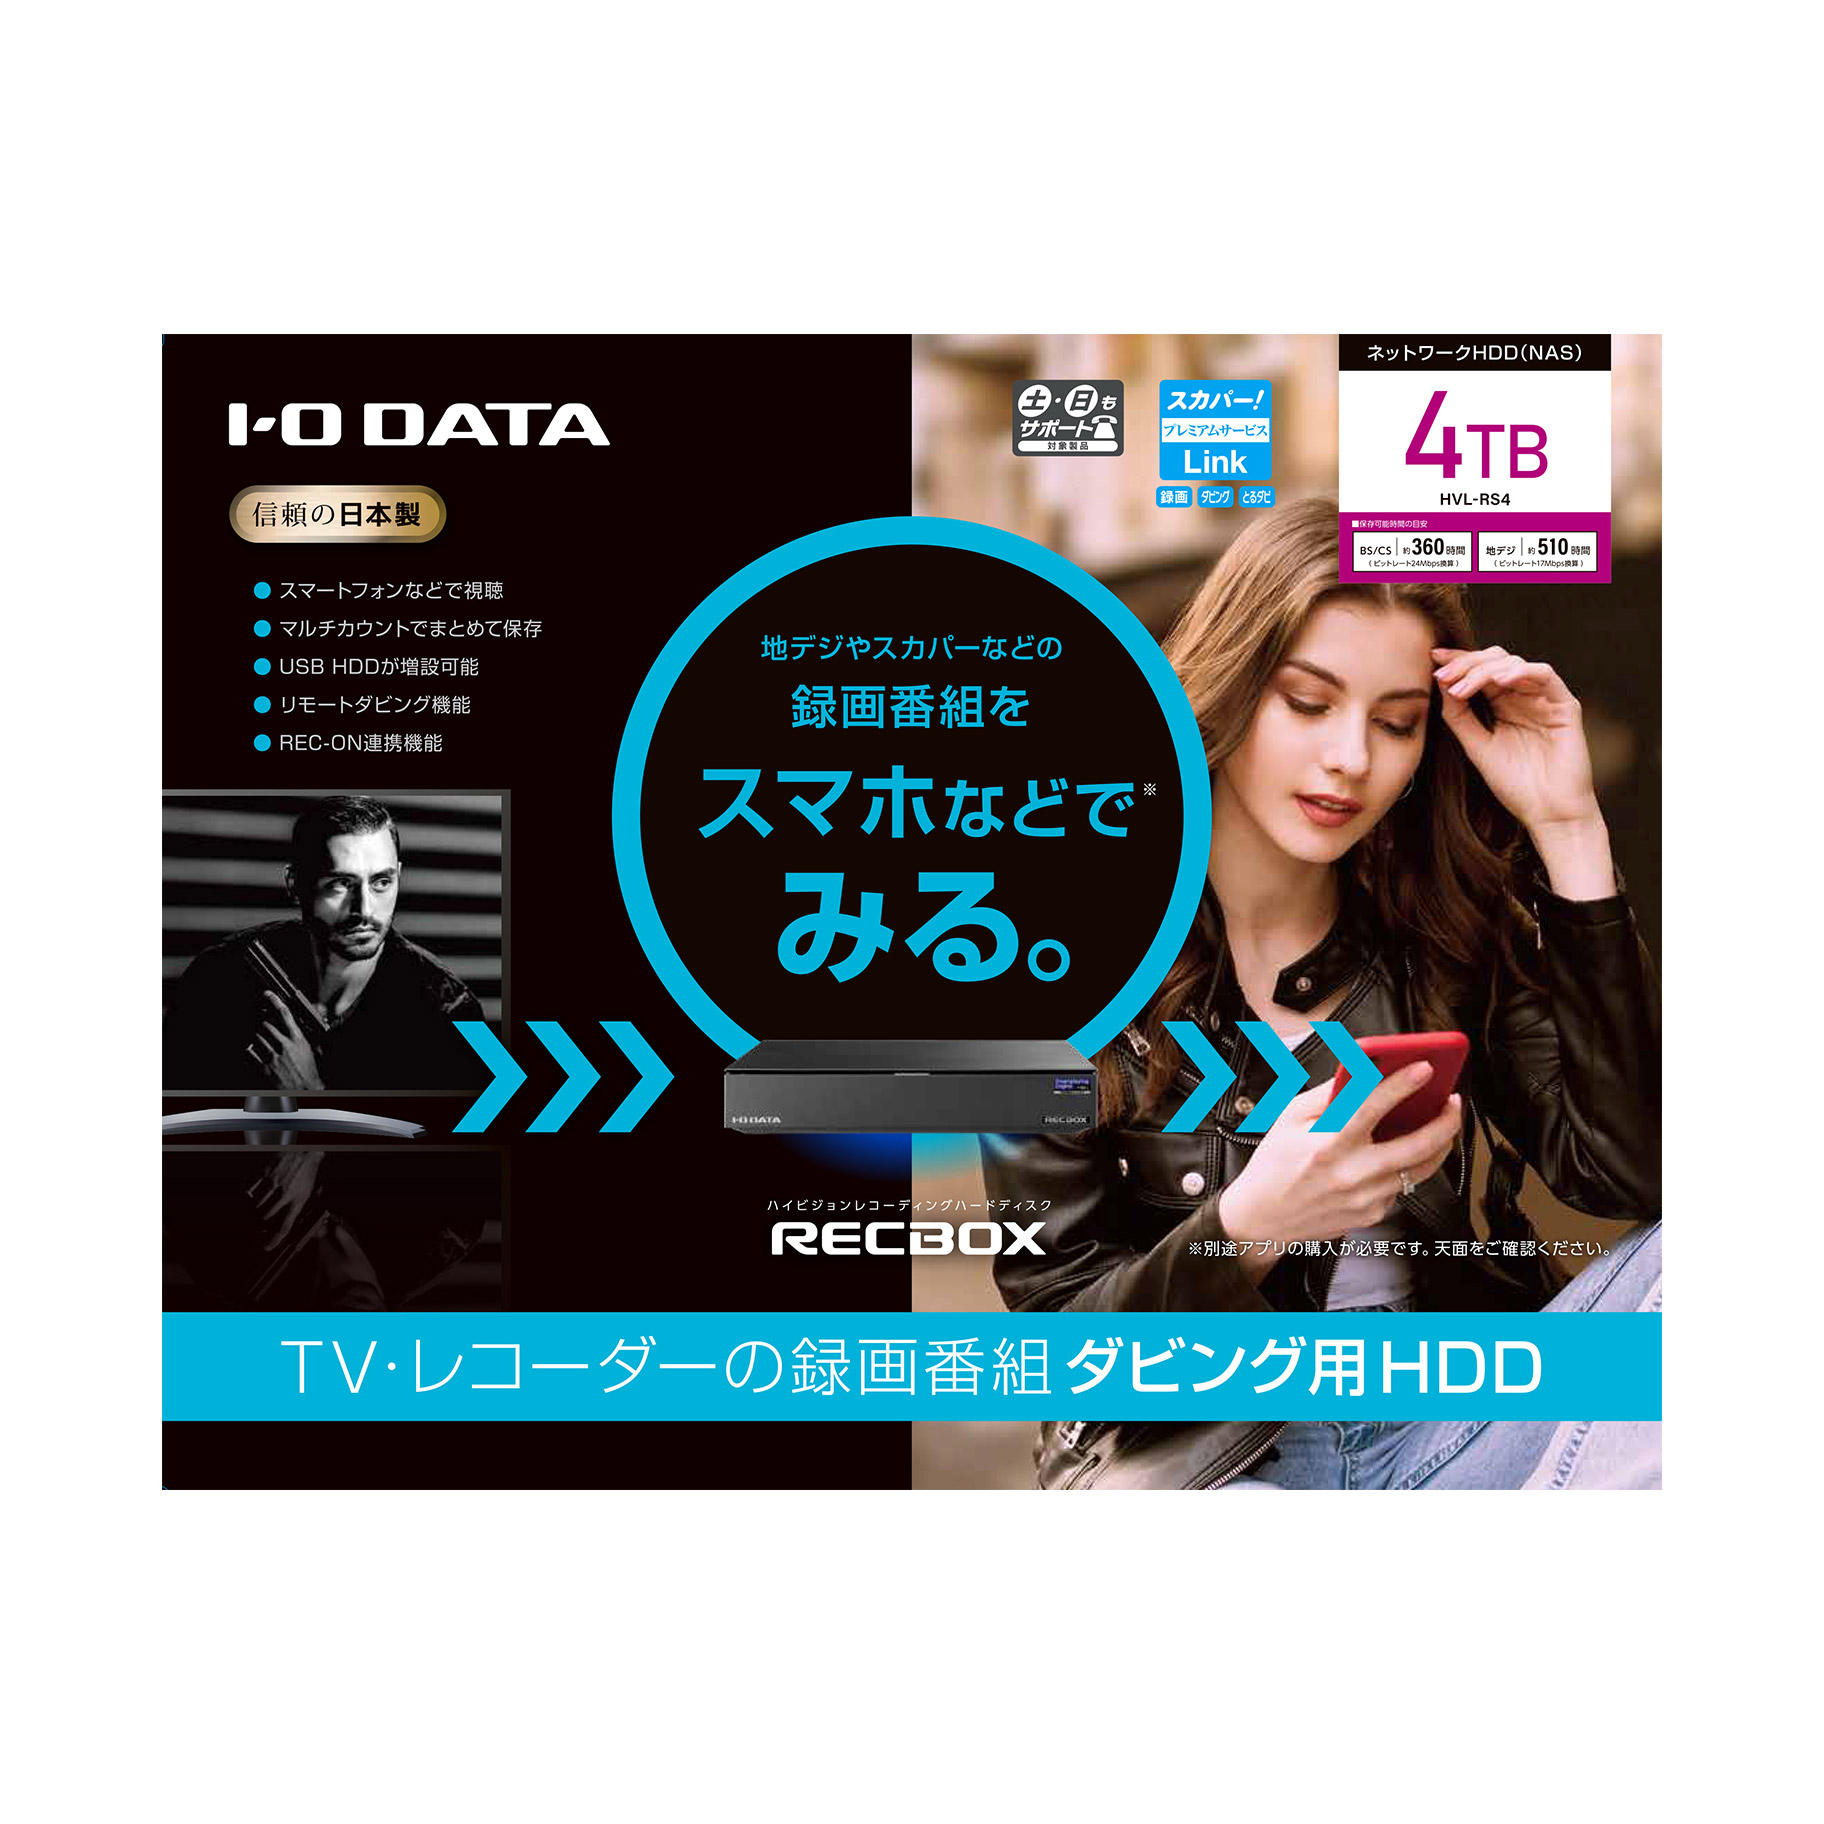 I・O DATA RECBOX HVL-RS4 4TB